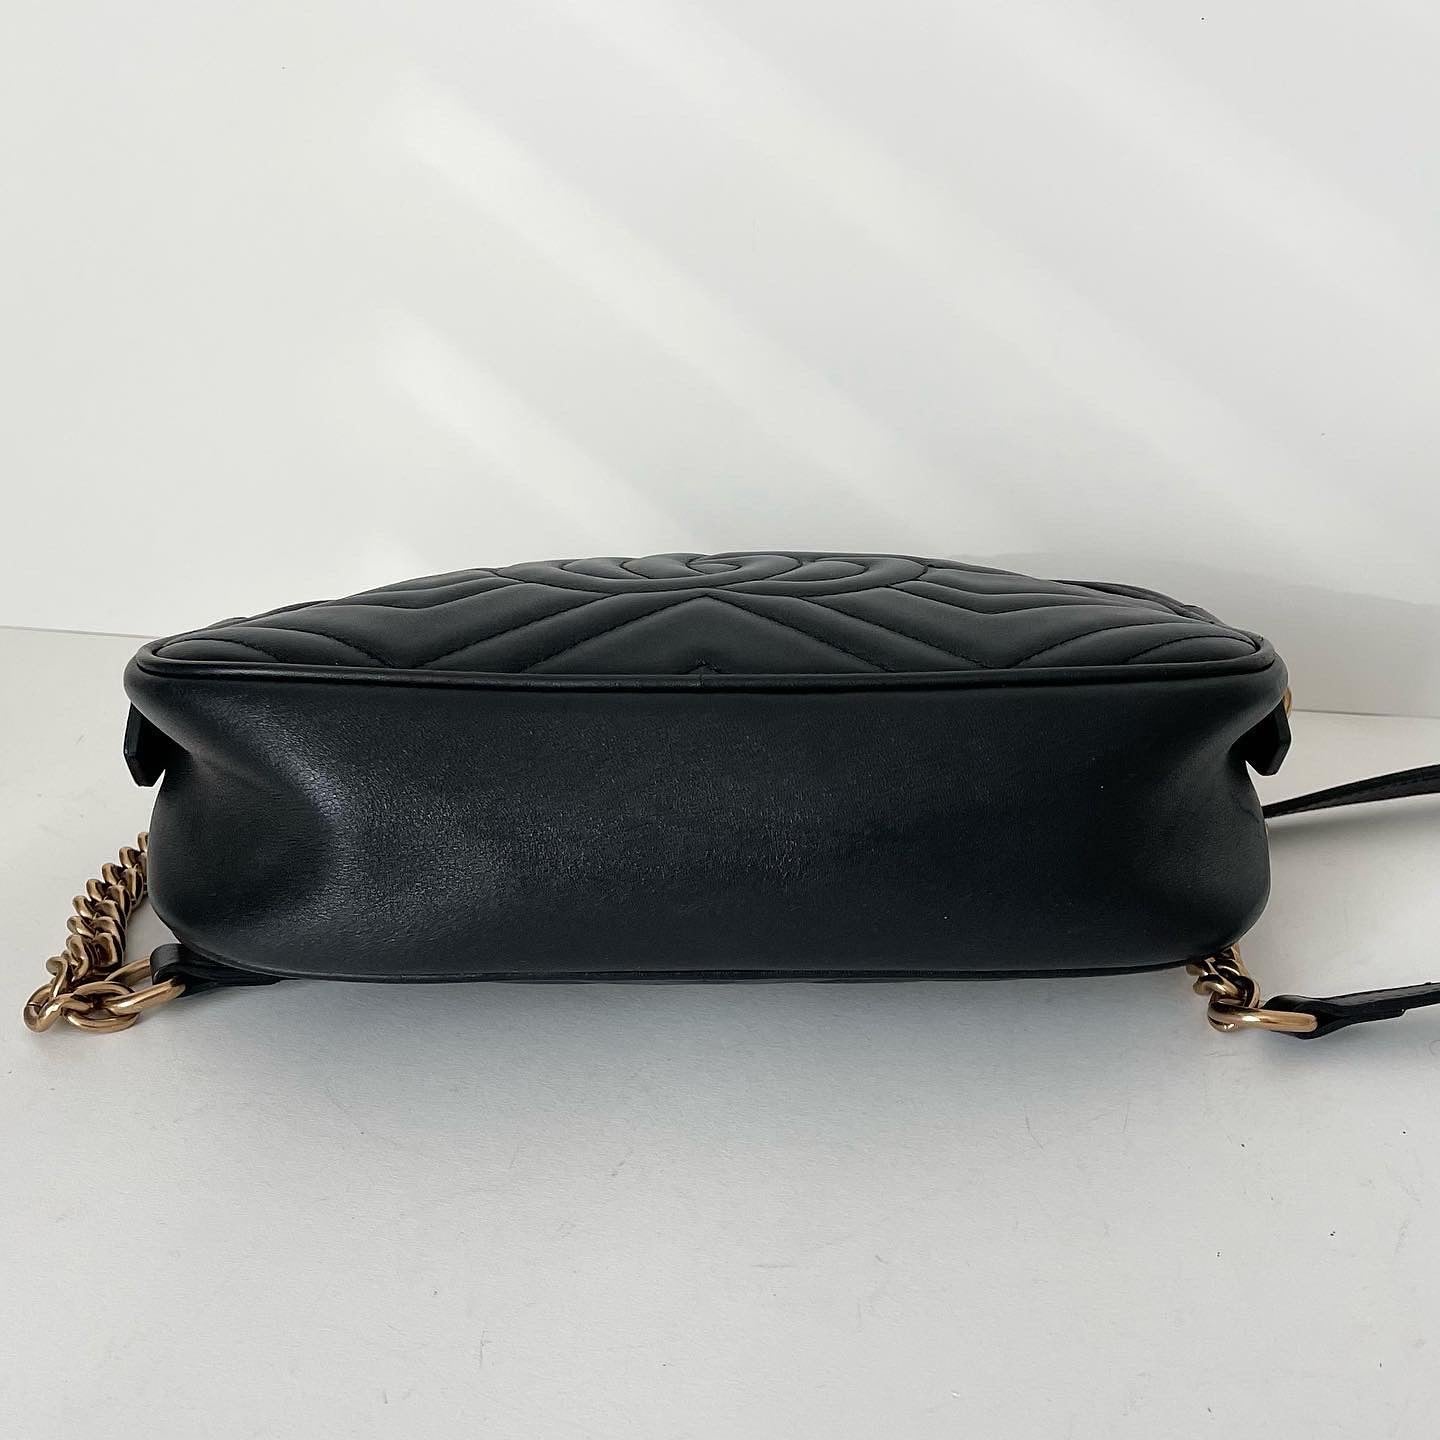 Authentic Gucci Marmont Small Camera Bag Black